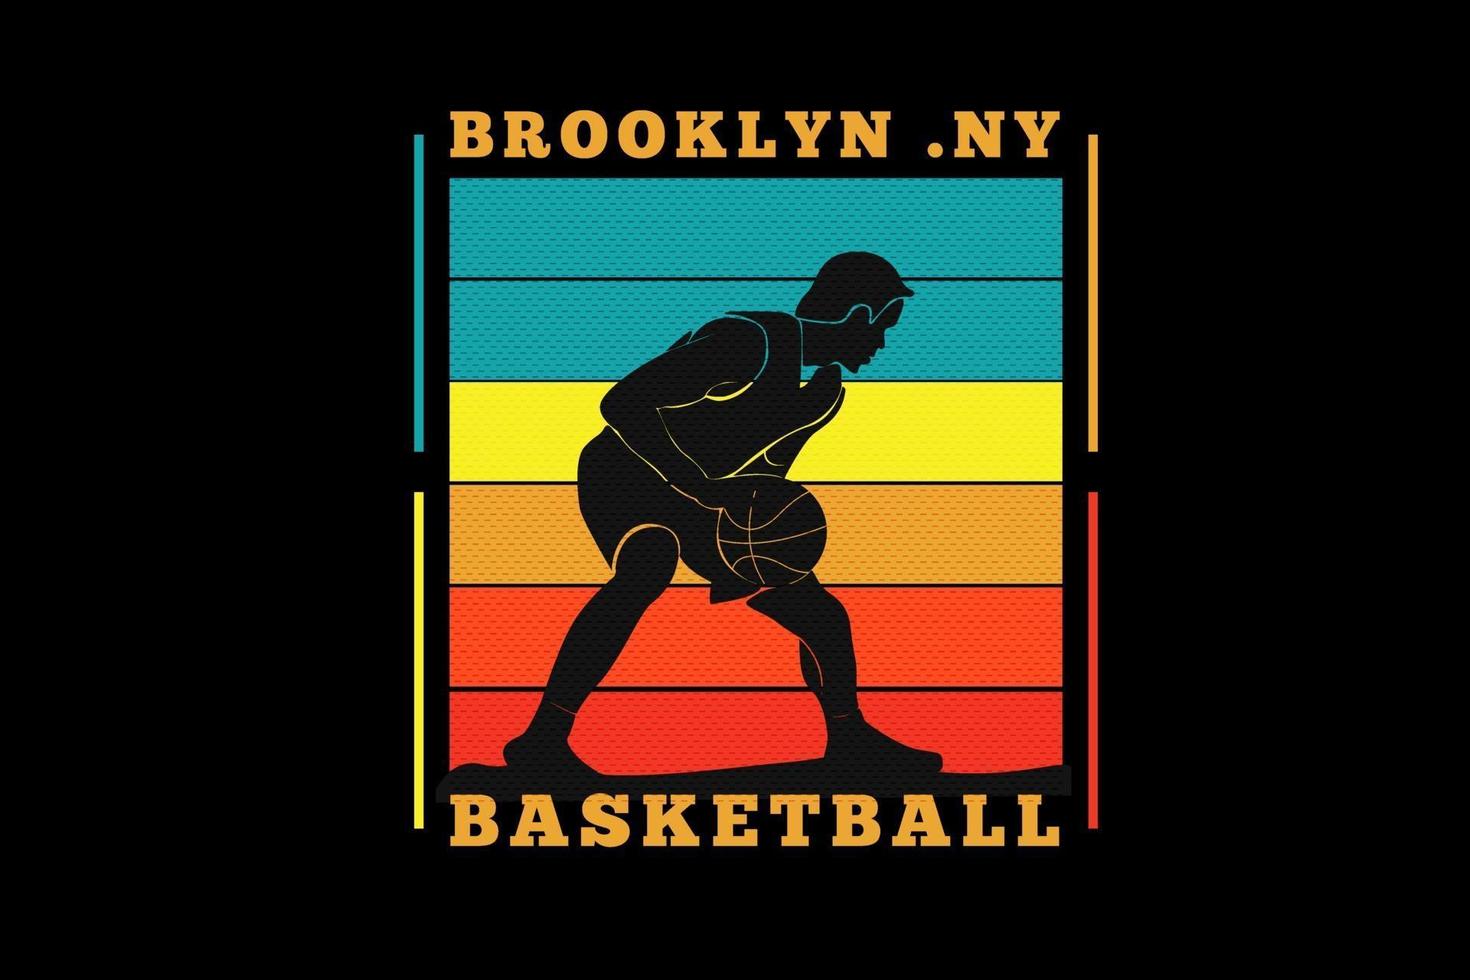 conception de silhouette de basket-ball de brooklyn vecteur